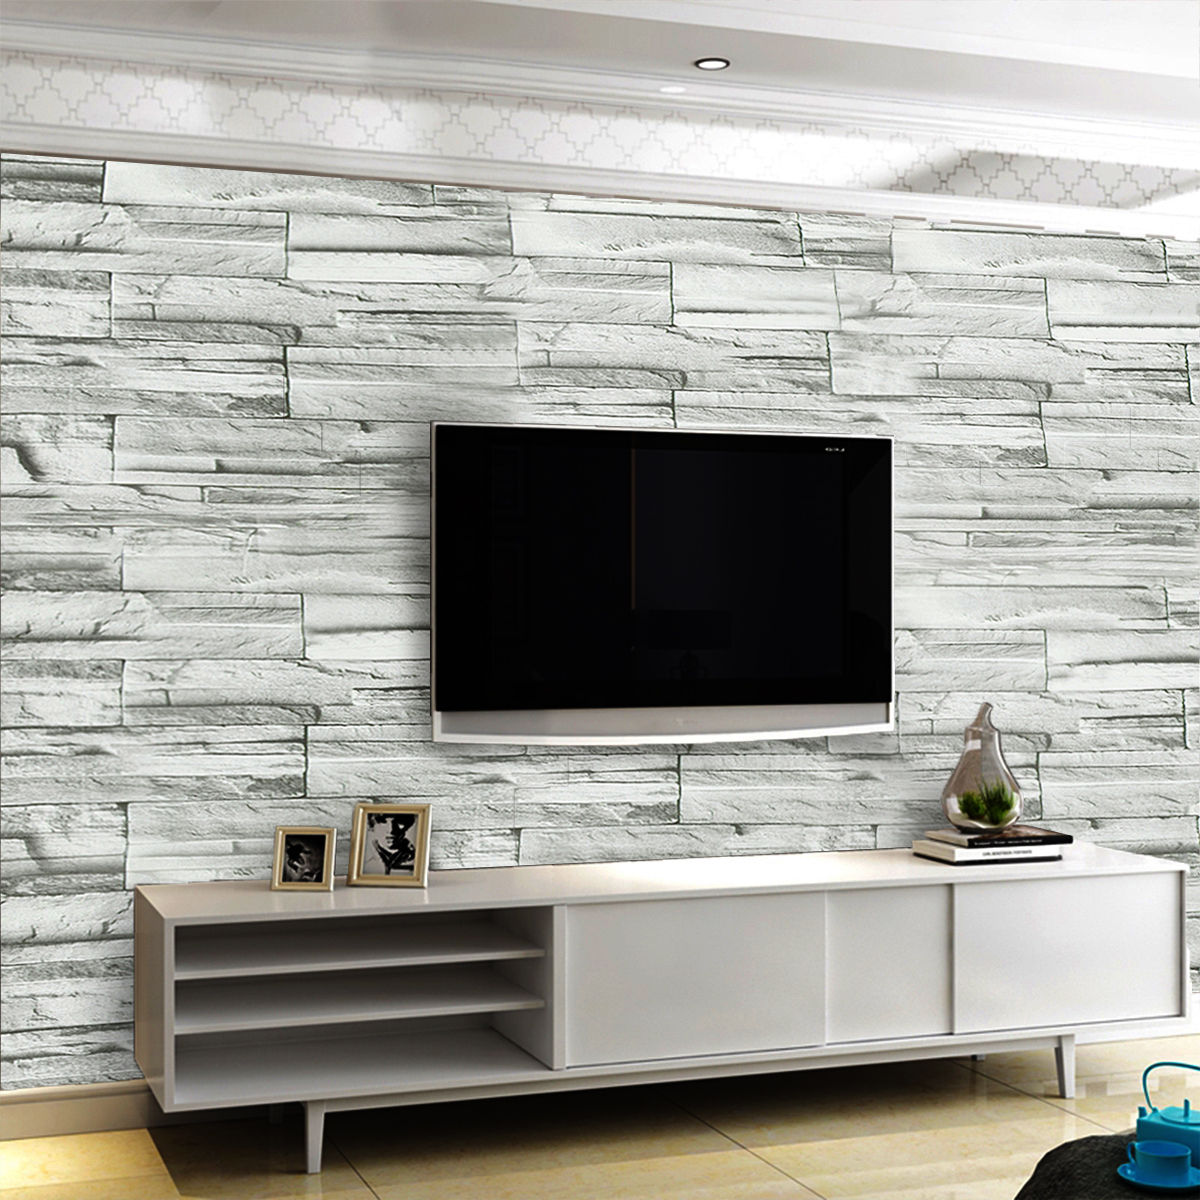 10m-Rustic-Grey-Brick-Self-Adhesive-Wallpaper-Home-Living-Room-Decoration-Wall-Sticker-Roll-1249471